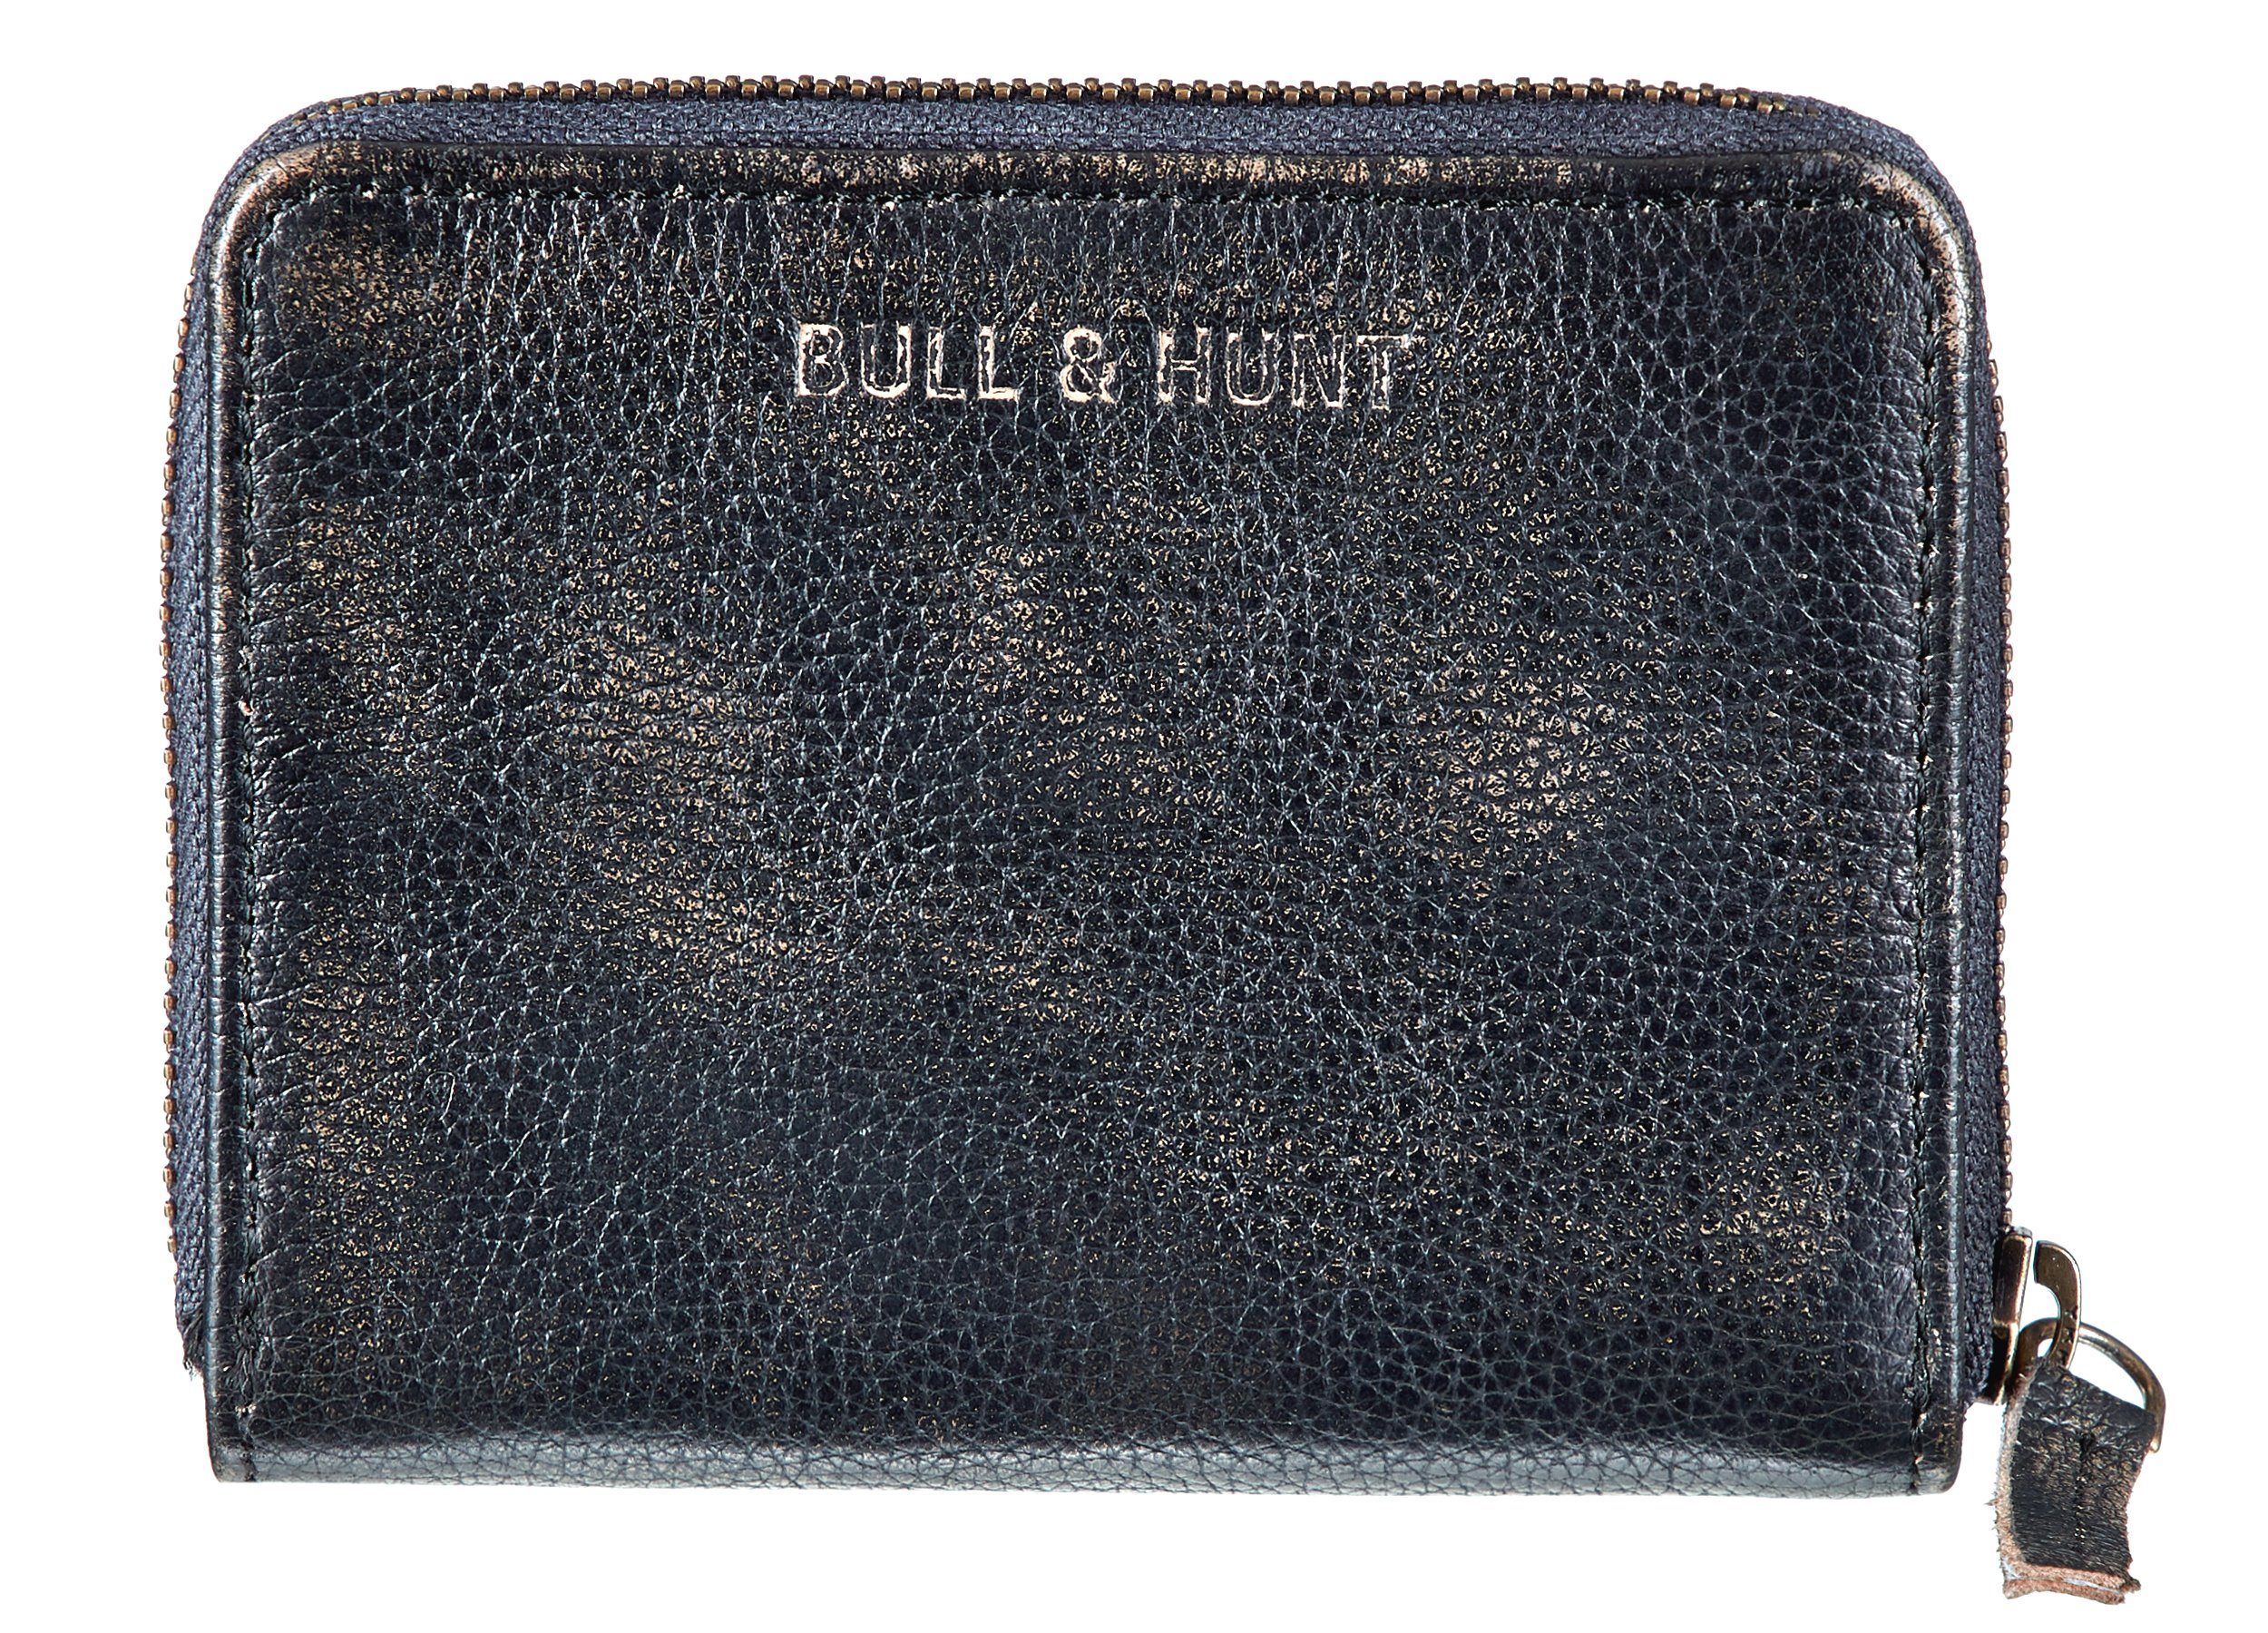 Bull & Hunt Geldbörse midi zip wallet black distressed